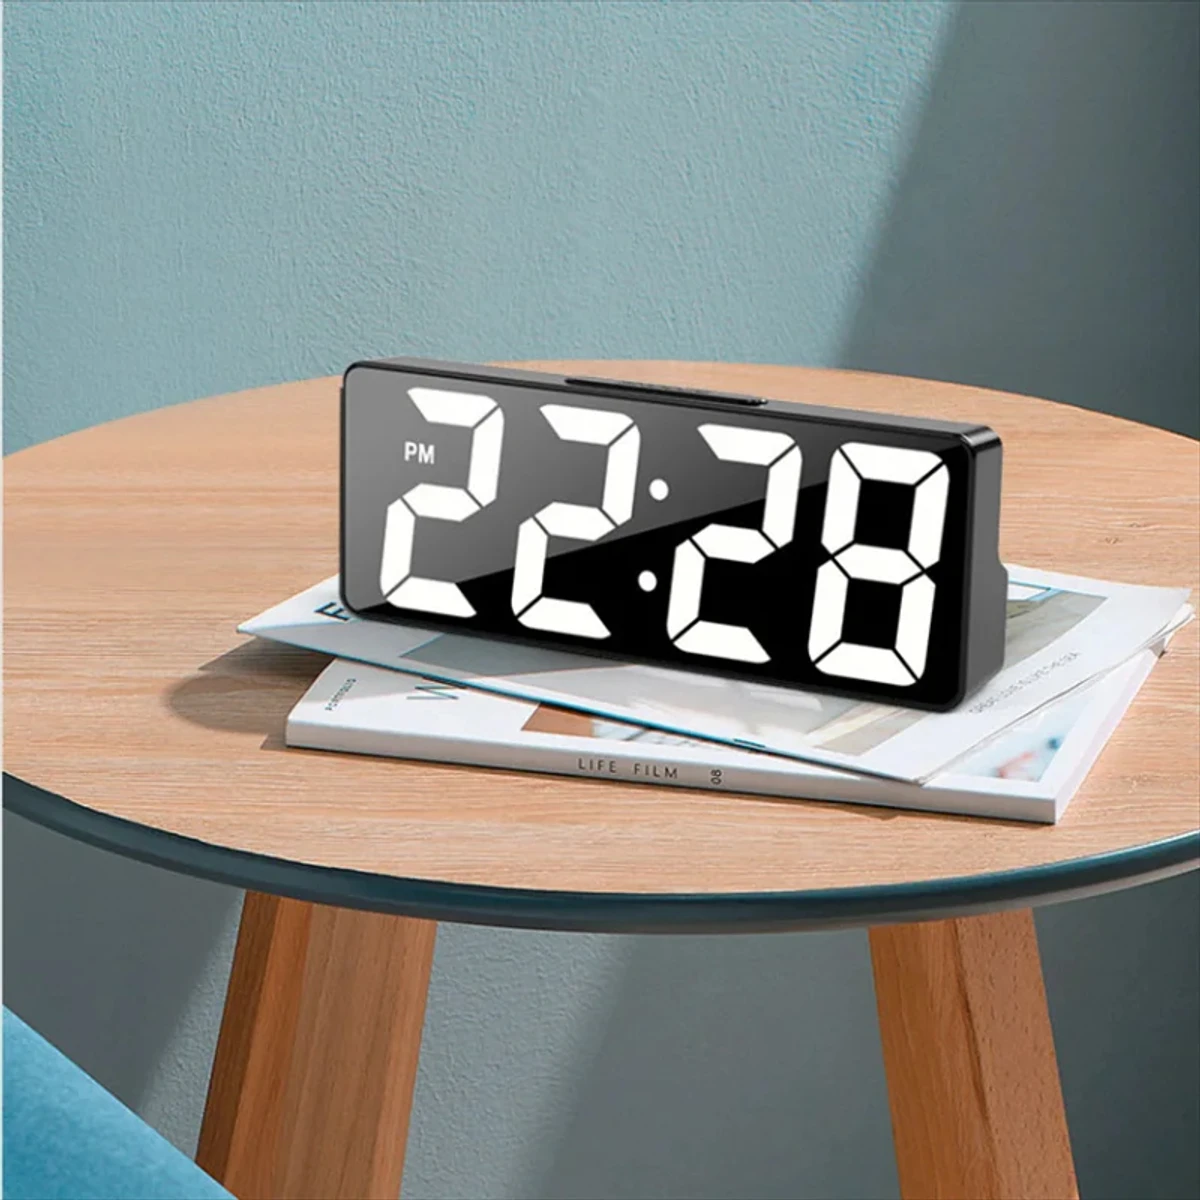 LED Mirror Digital Alarm Clock Table Clock Desktop Clock With Temperature Display